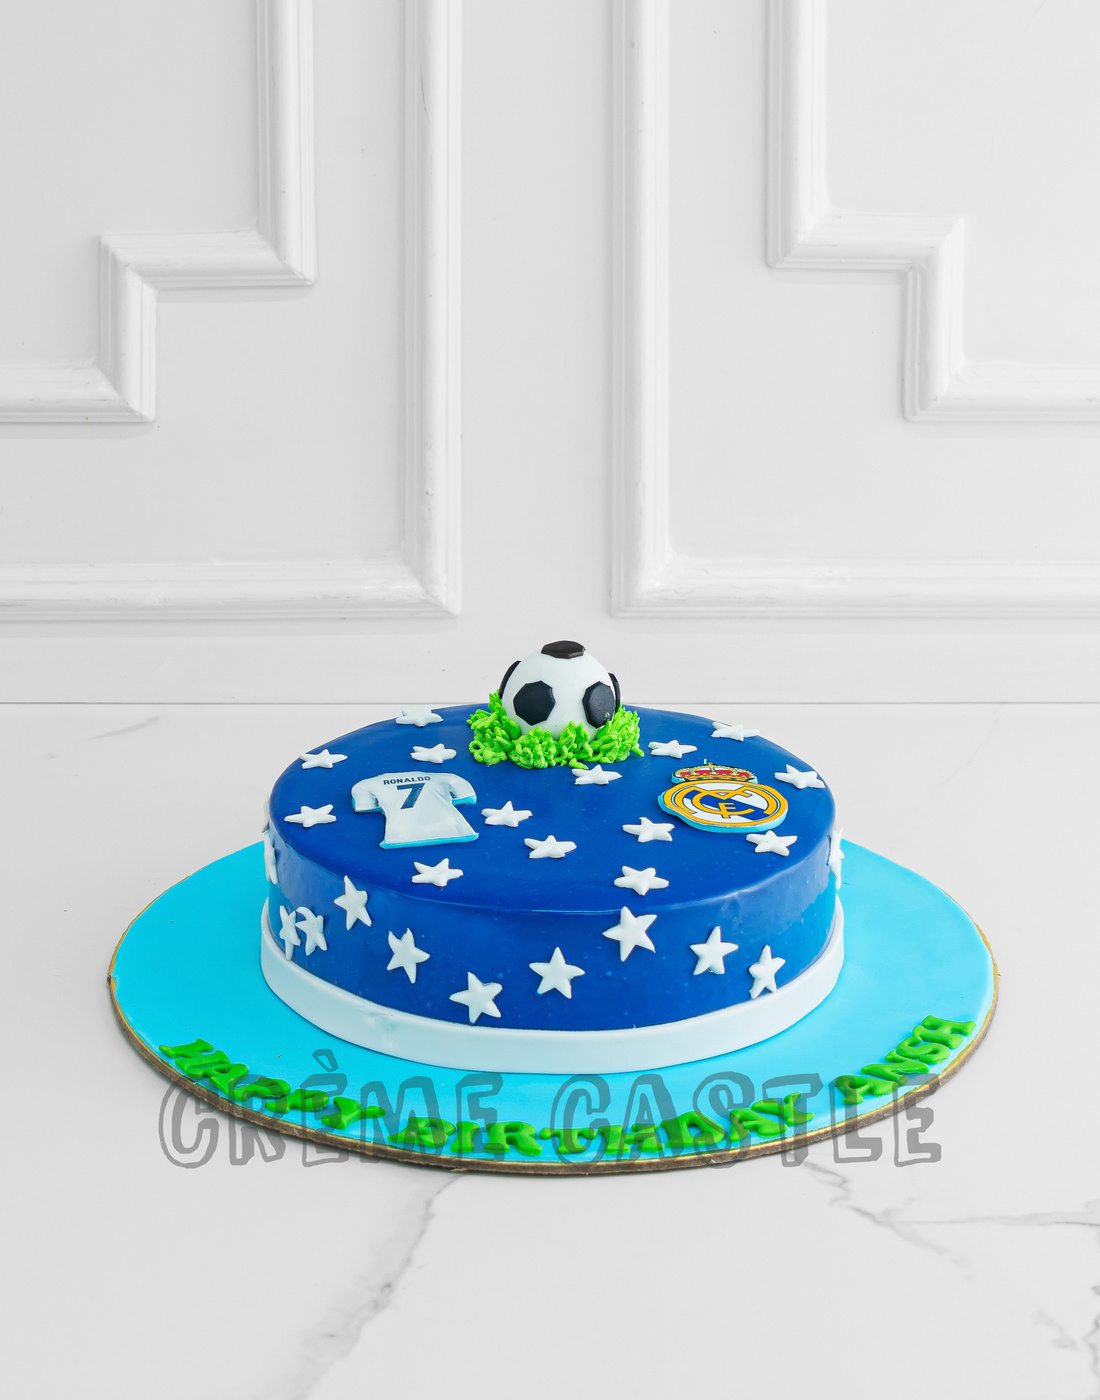 Real Madrid Blue Cake - Creme Castle